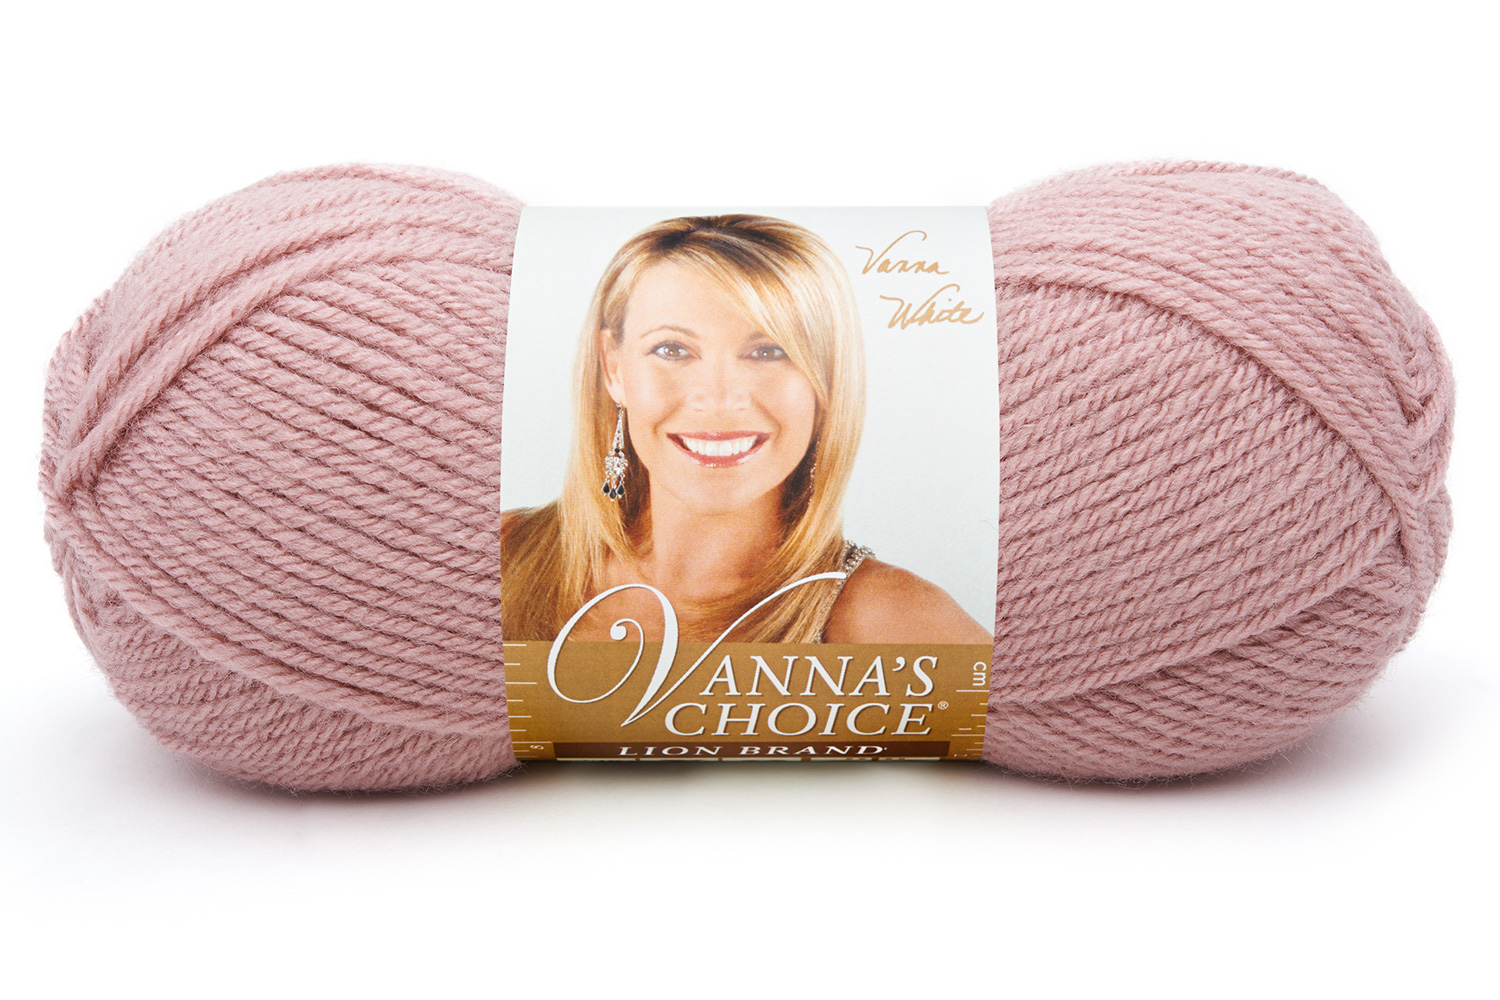 Vanna's Choice yarn in Dusty Rose